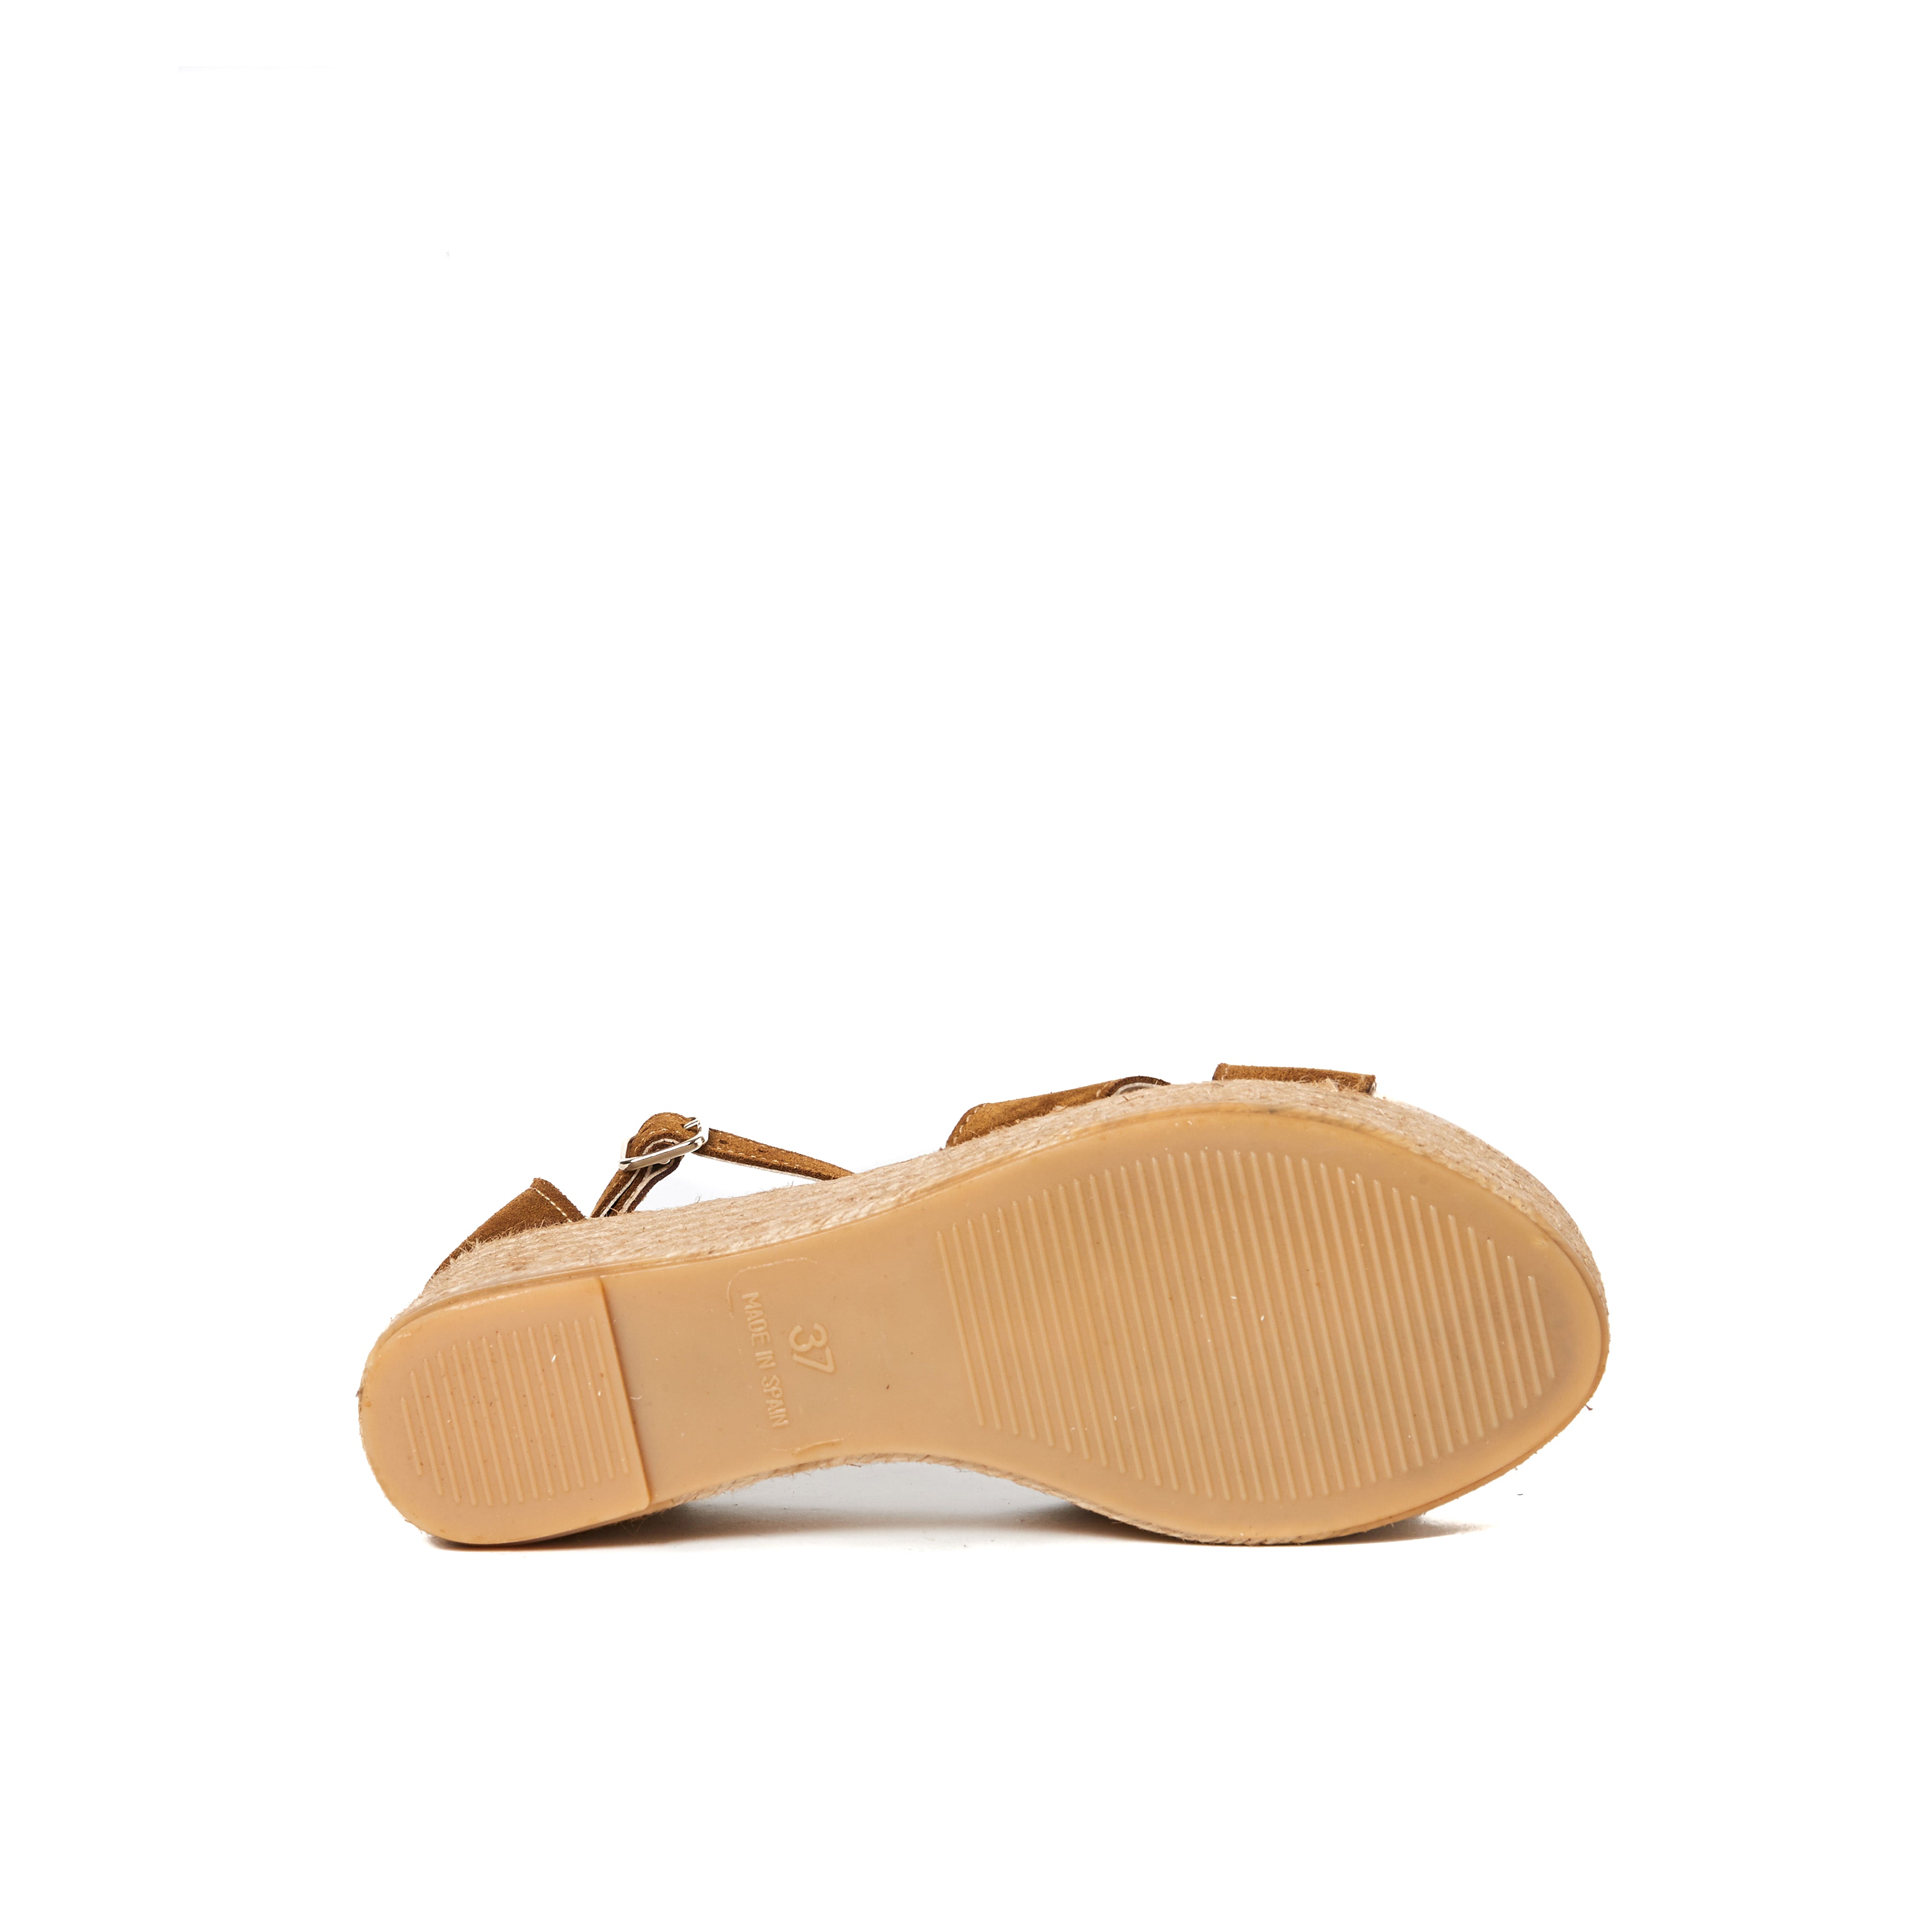 Sandal tannin brown